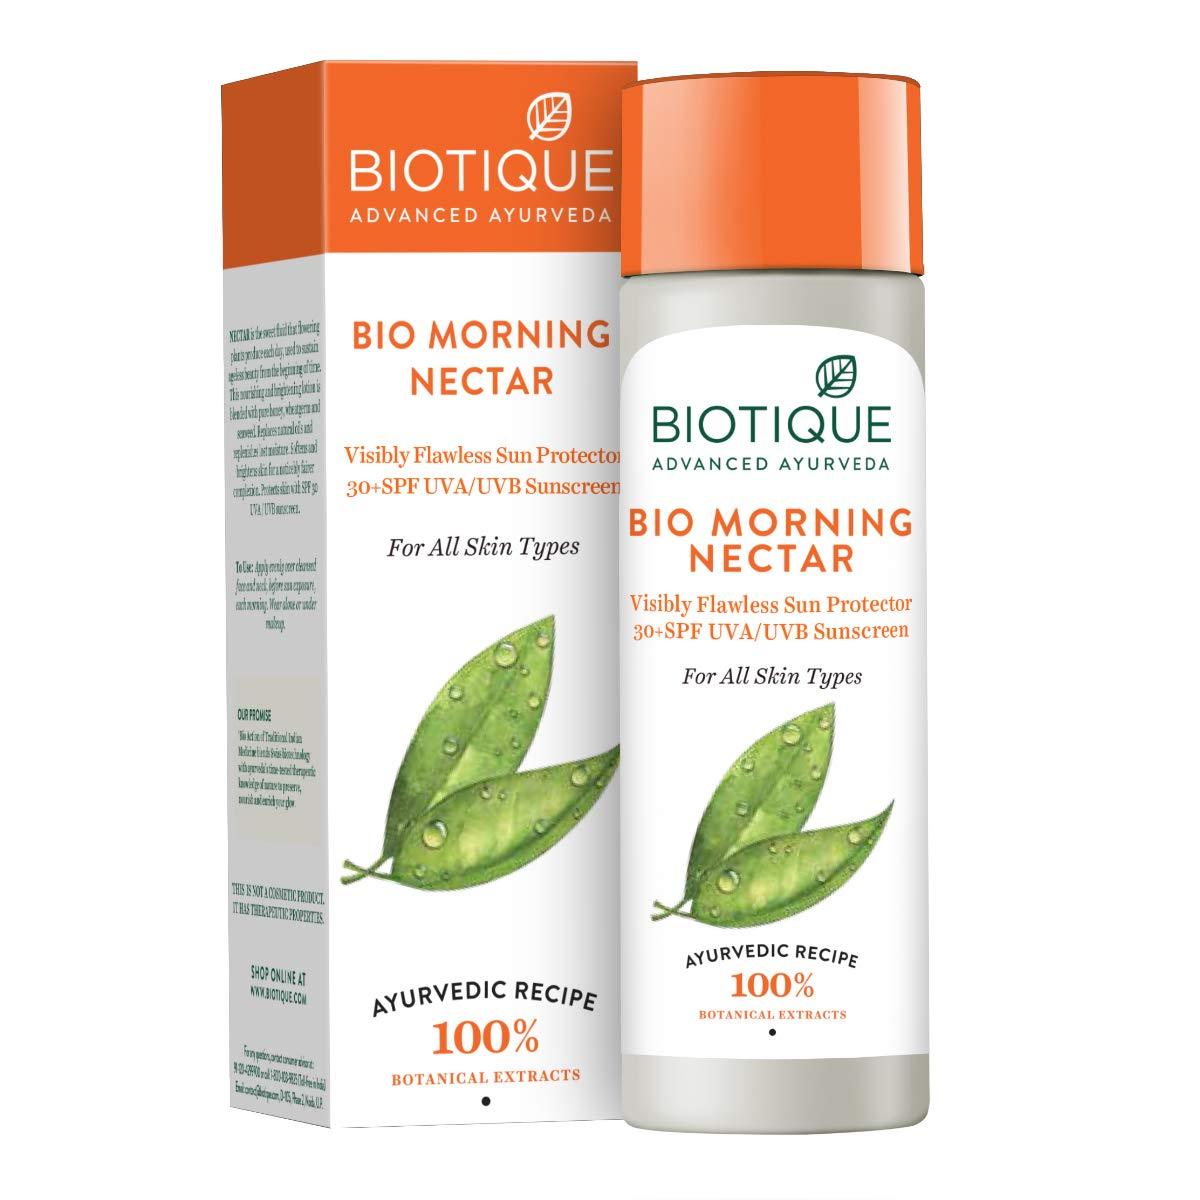 Buy Biotique Magicompact Skin Brightening Compact Pressed Powder SPF 15  Online